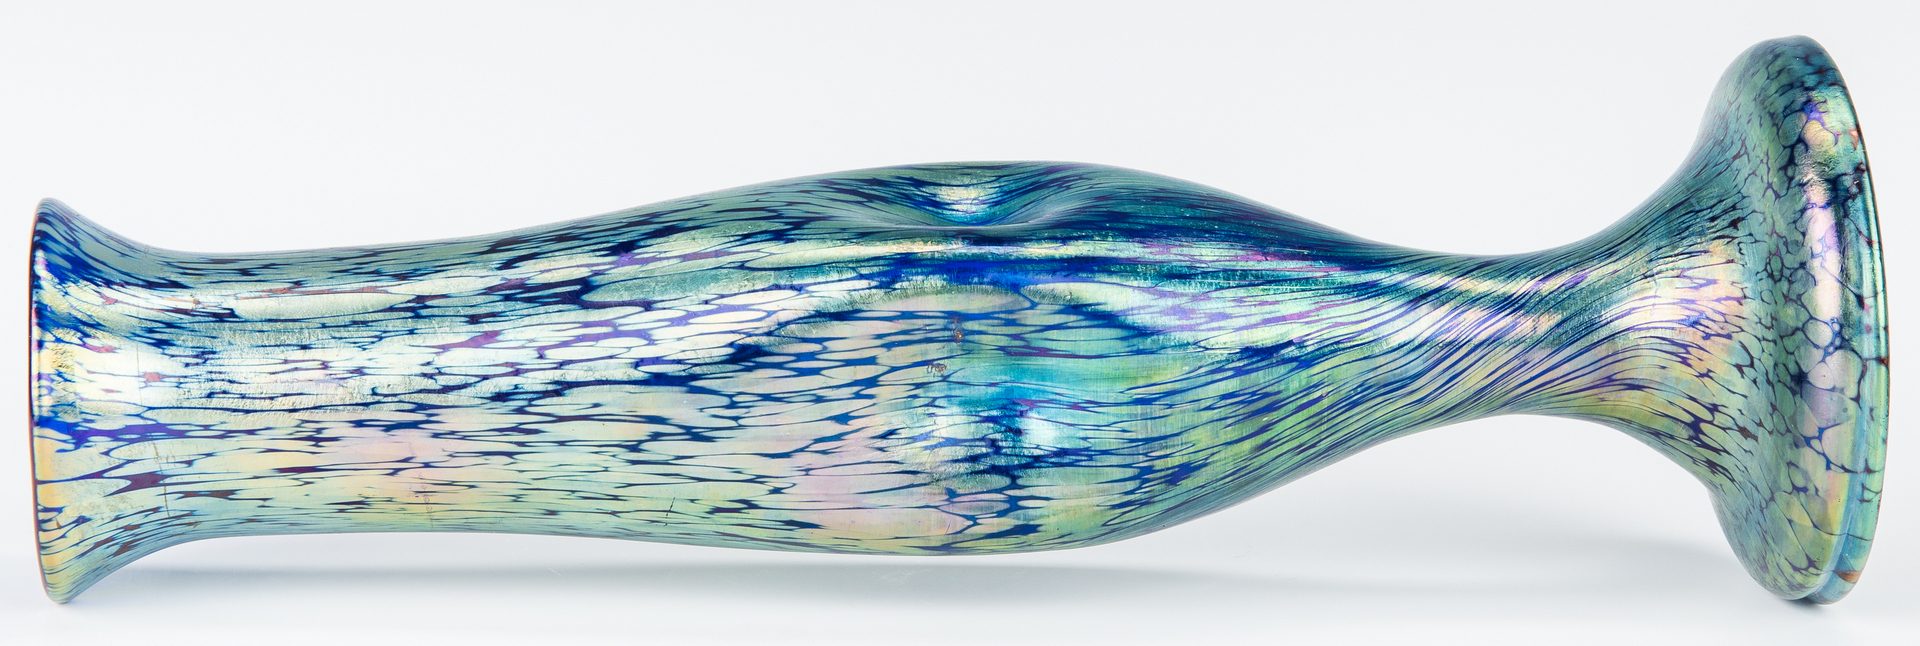 Lot 270: Loetz style Art Glass Vase, unmarked